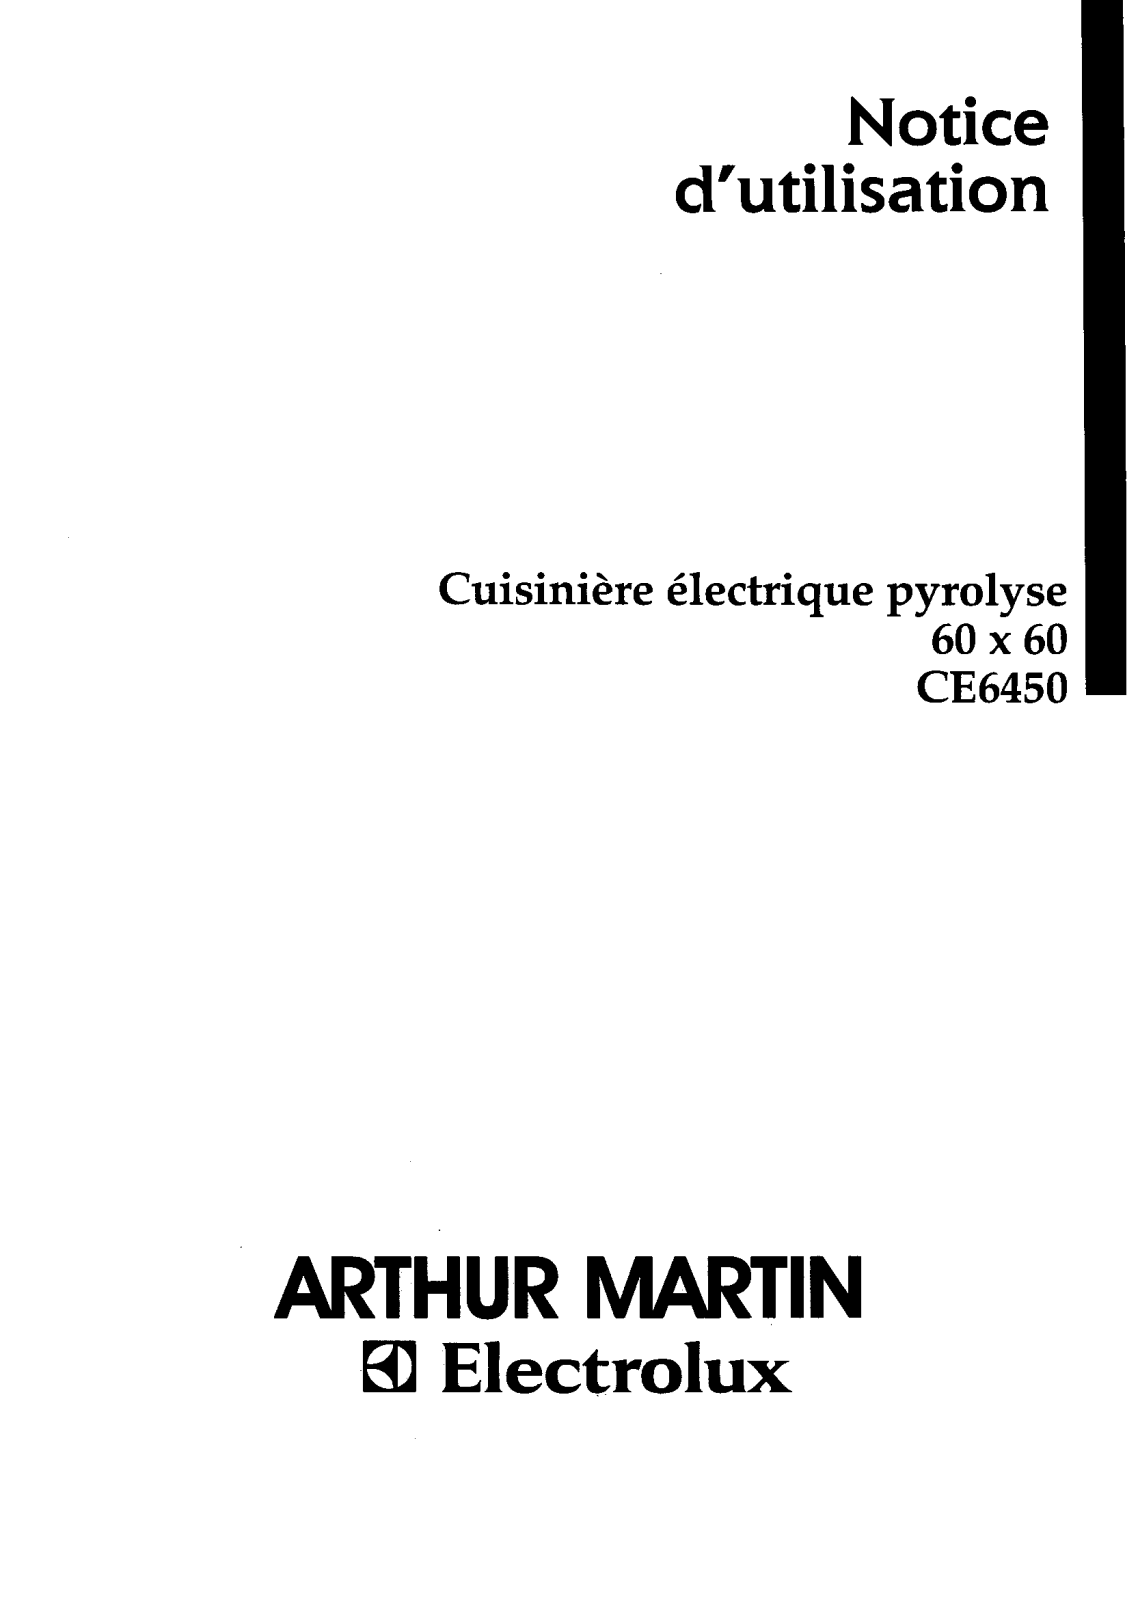 Arthur martin CE6450 User Manual